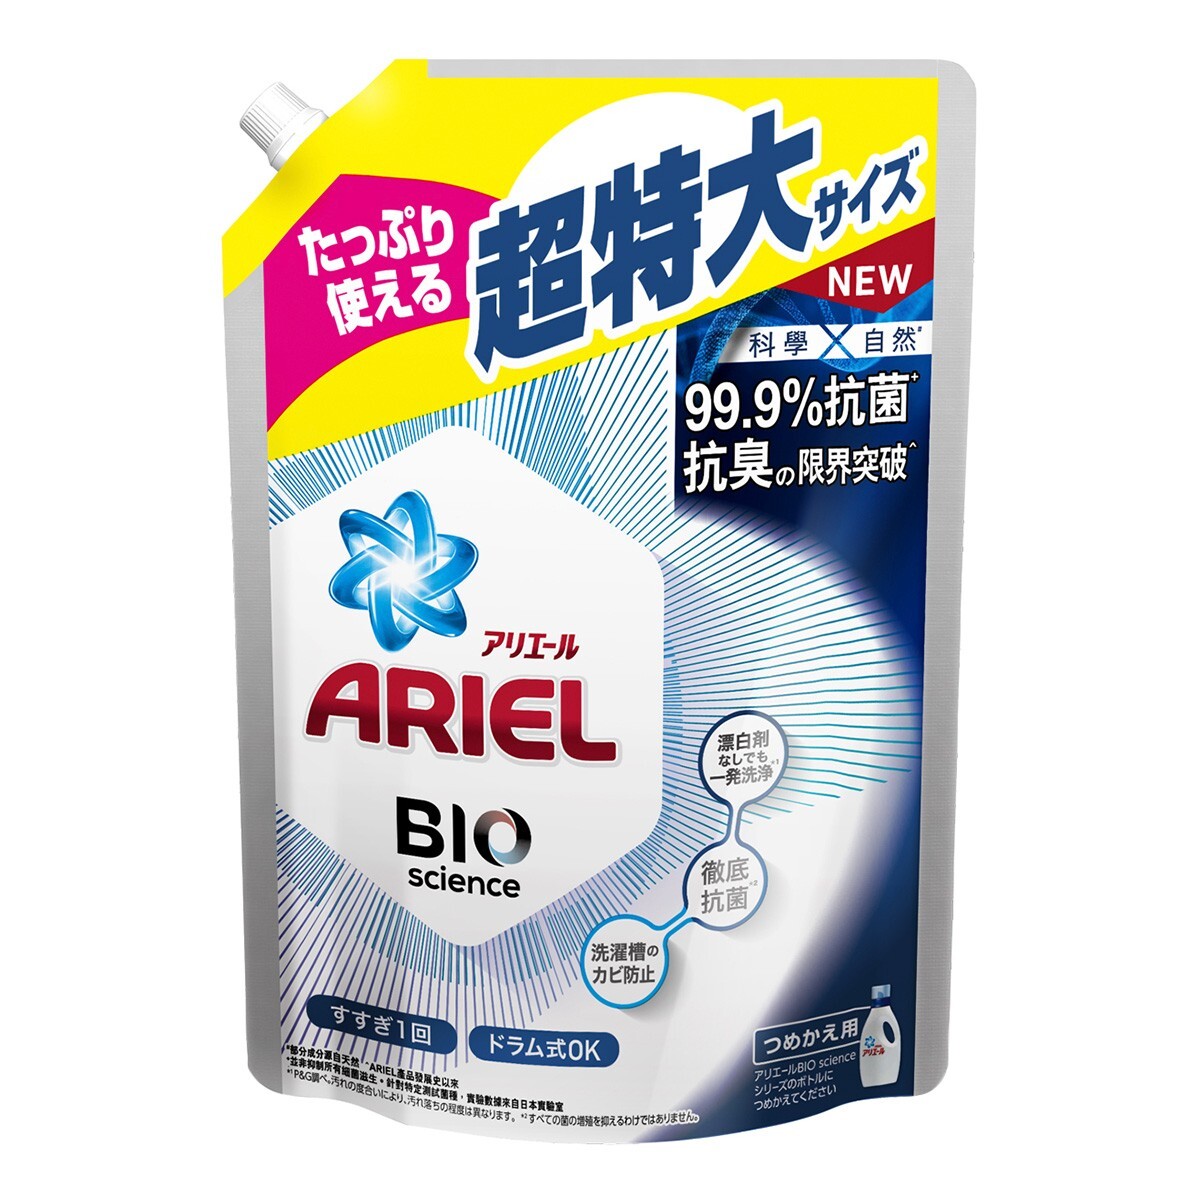 Ariel 抗菌抗臭洗衣精補充包 1100公克 日本製 洗衣精 超取最多3包